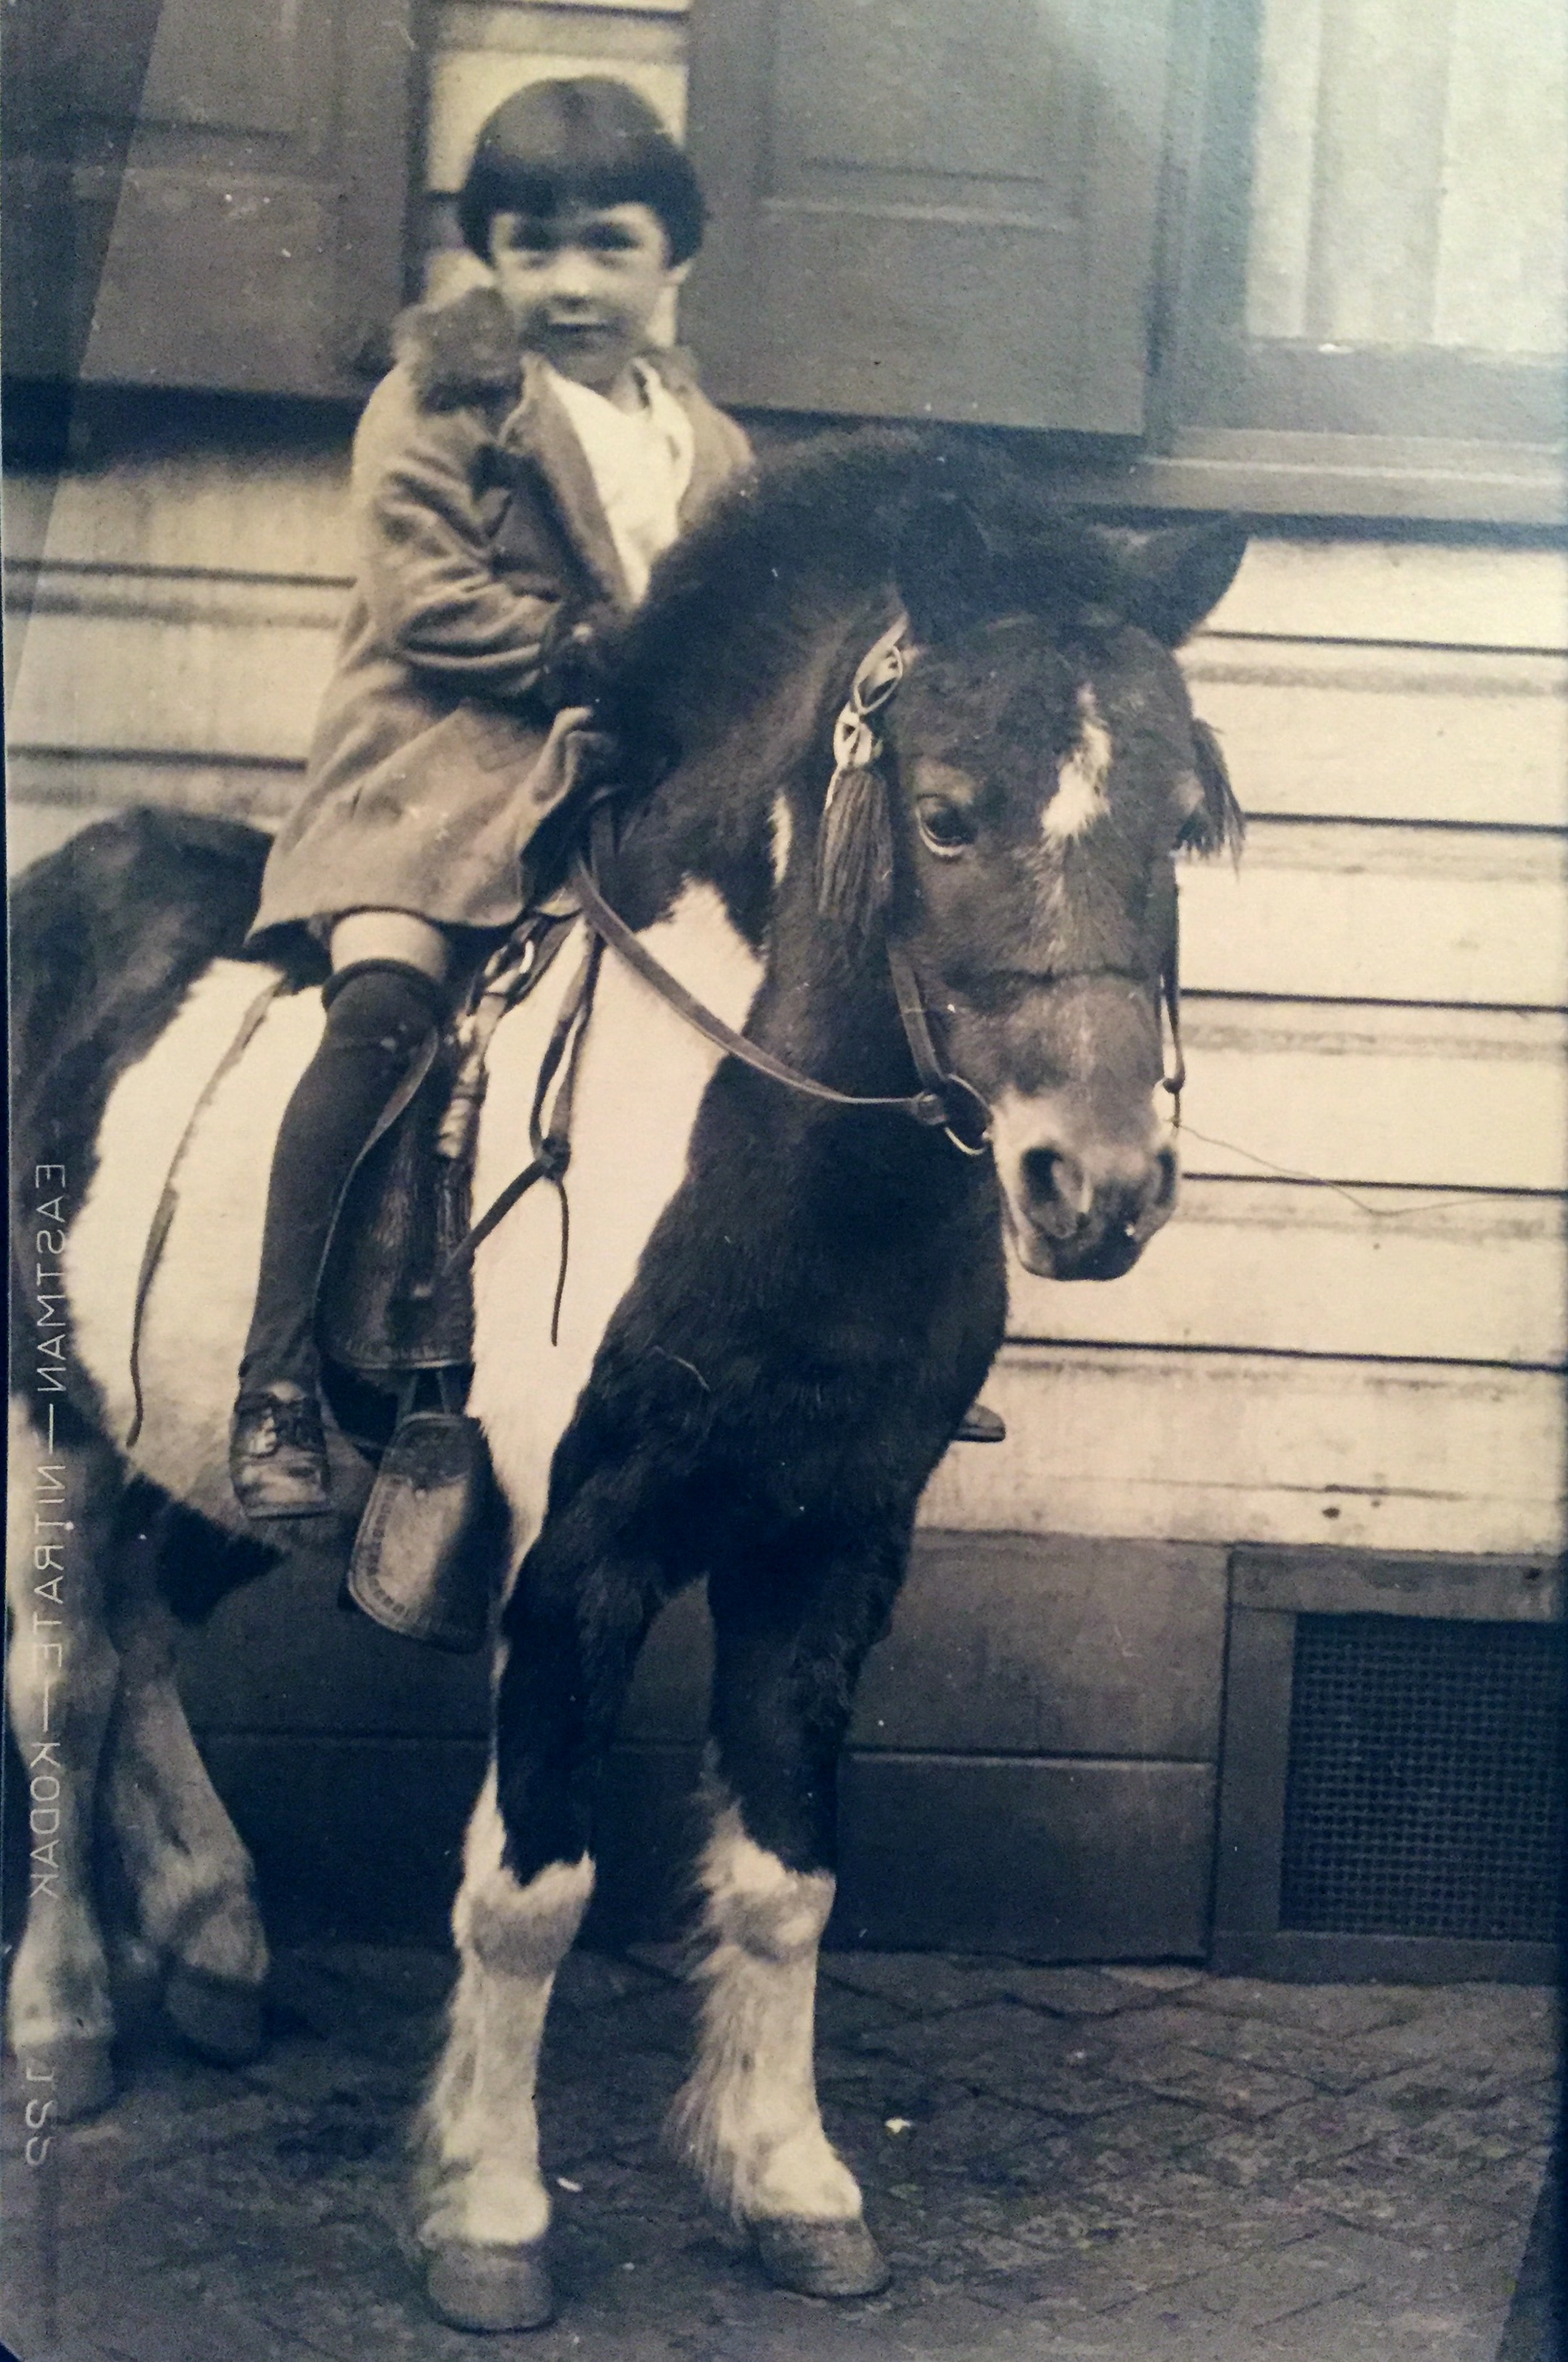 Francie on pony, Pittsburgh circa 1930